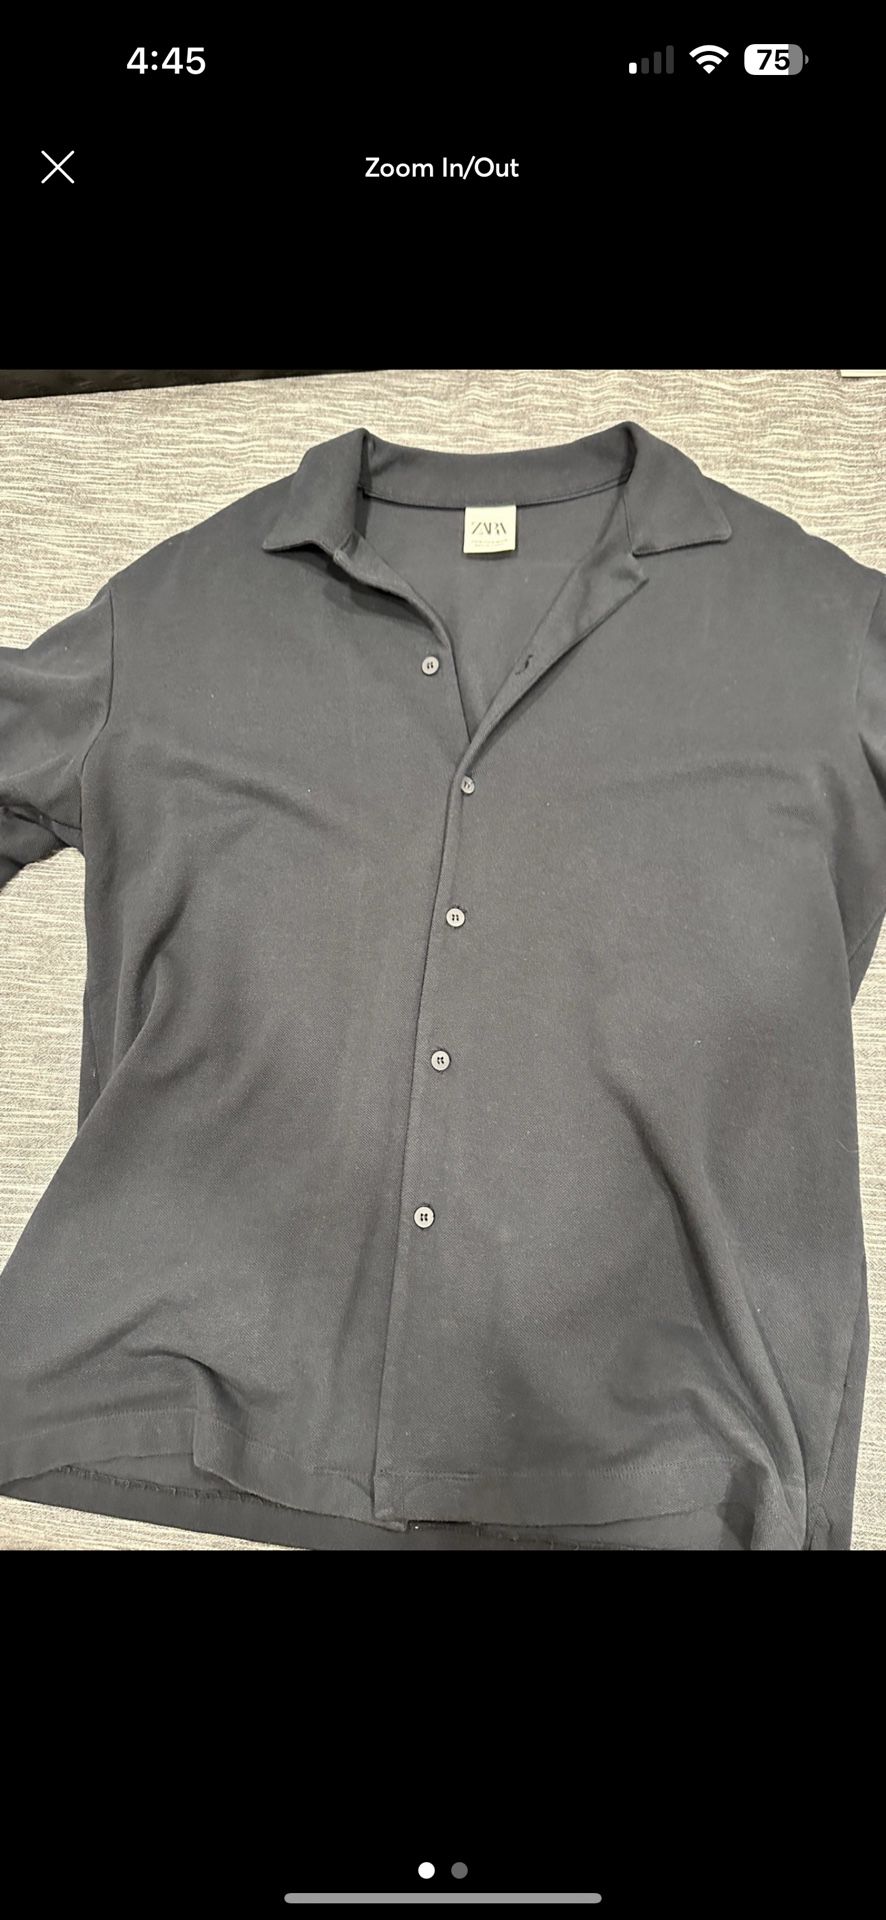 New Men’s Zara Shirts Size Medium 2 For $20 